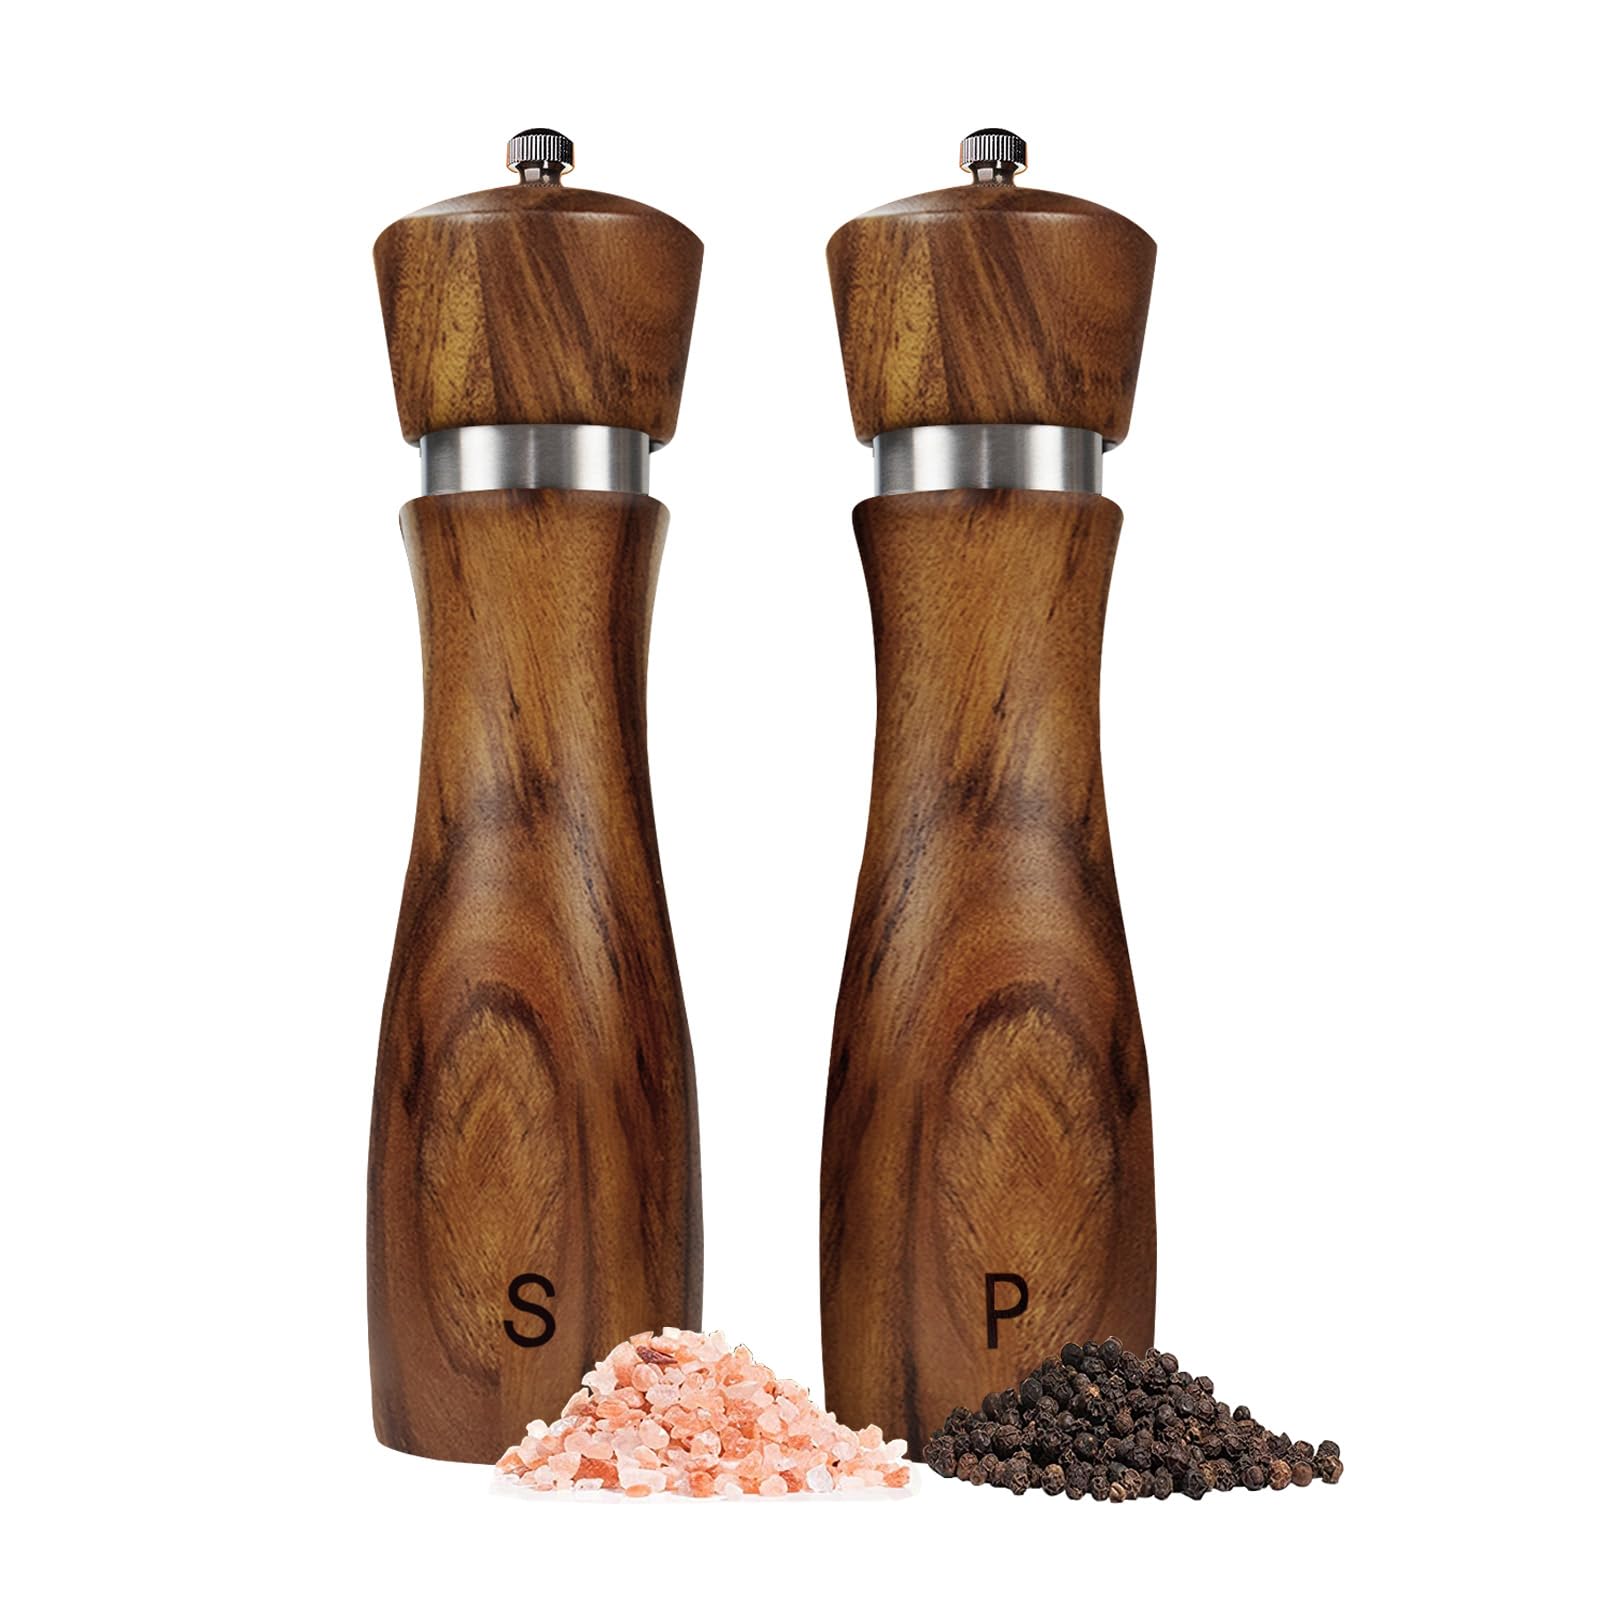 2 Pack Salt and Pepper Grinder Set, Acacia Wood Salt Mill Pepper Grinder with Ceramic/Stainless Steel Core, Modern and Elegant Wooden Salt and Pepper Set